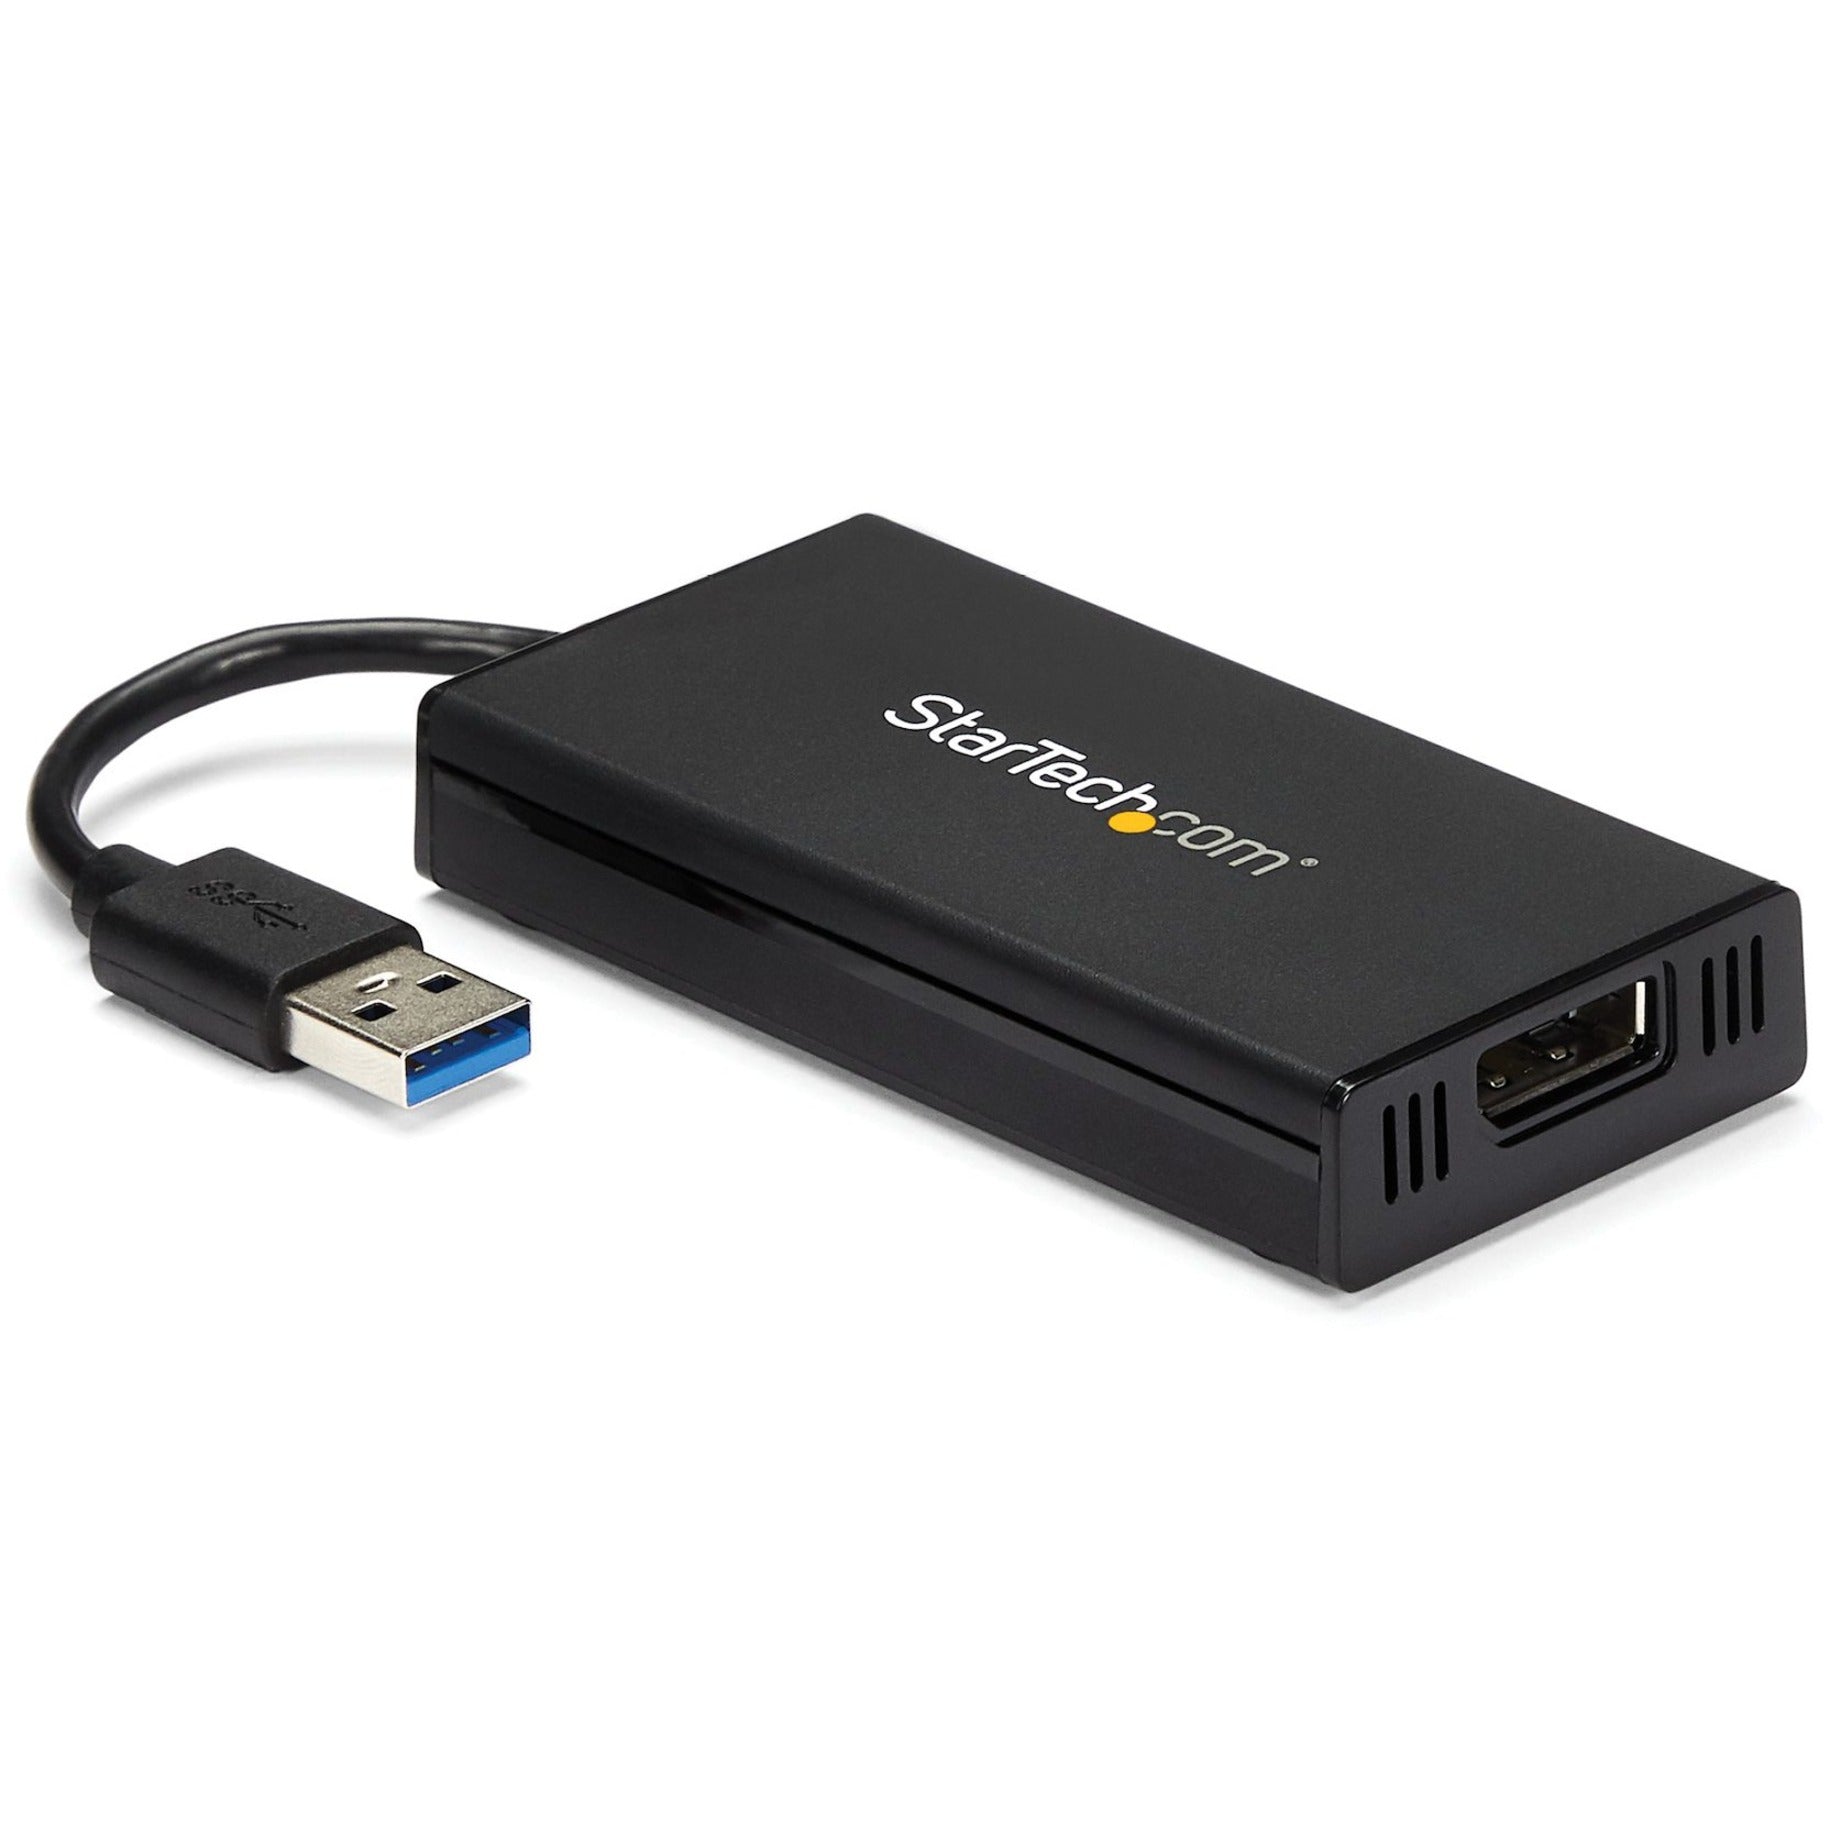 StarTech.com USB32DP4K USB 3.0 to 4K DisplayPort Video Adapter, External Multi Monitor Graphics